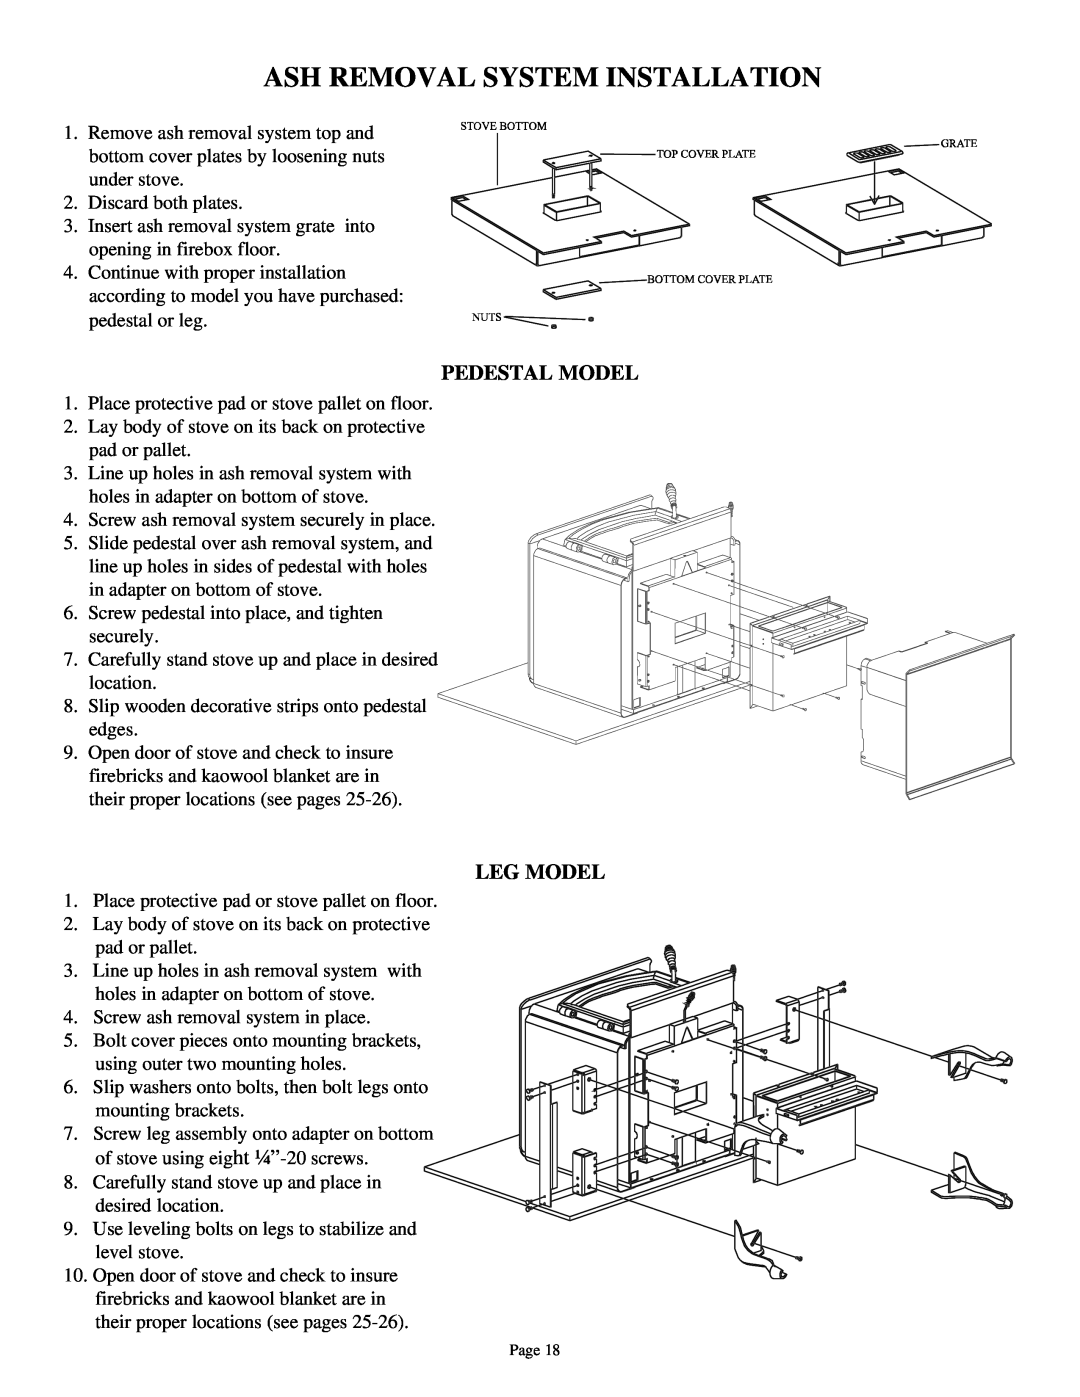 Quadra-Fire 3100 owner manual Ash Removal System Installation, Pedestal Model, Leg Model 